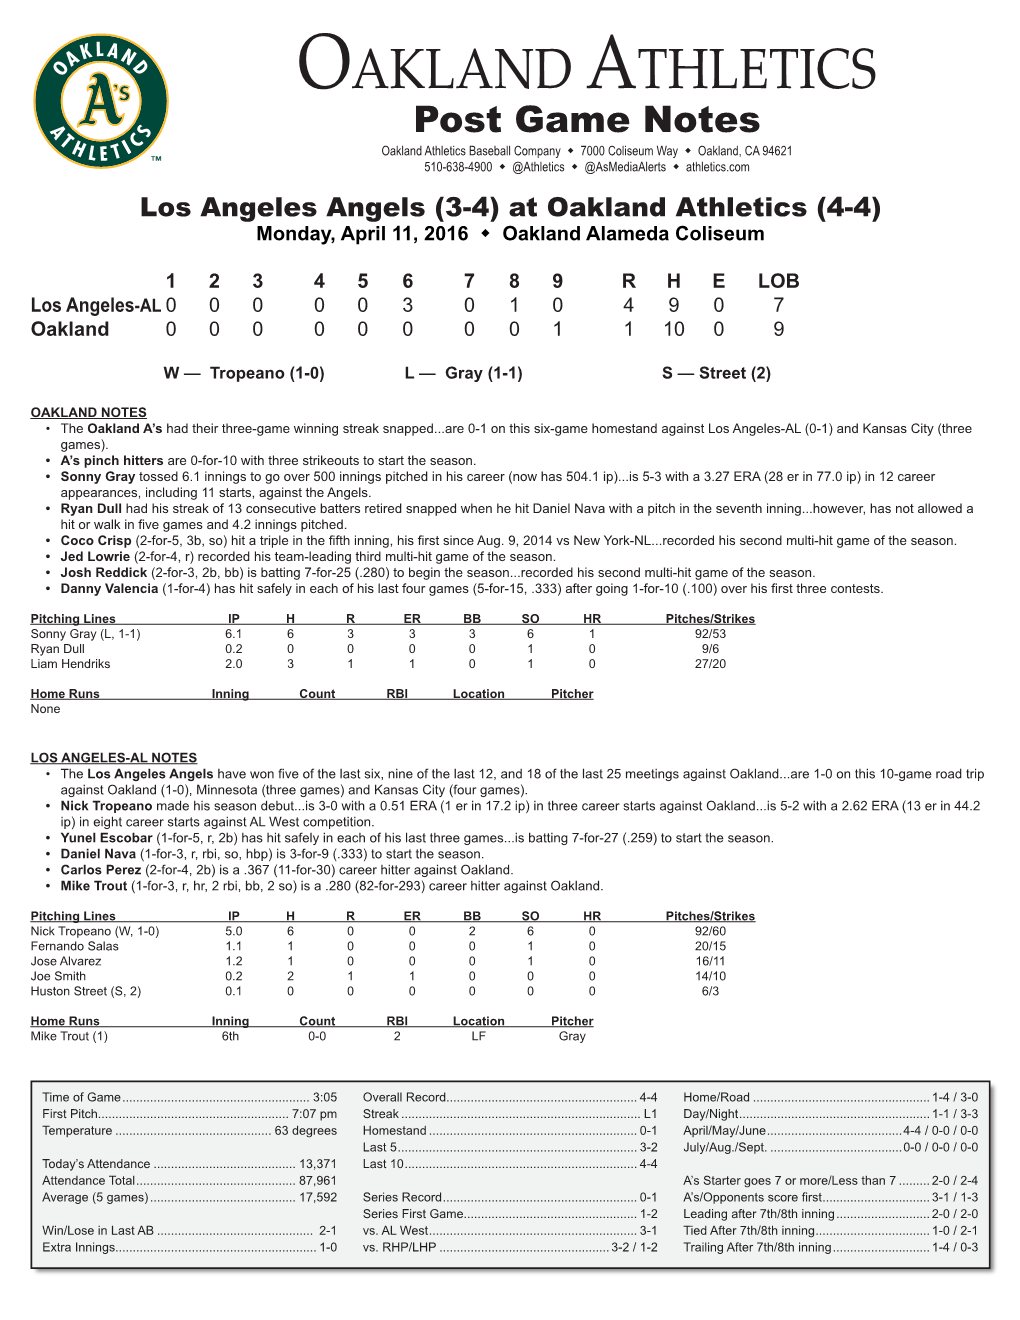 Oakland Athletics Virtual Press